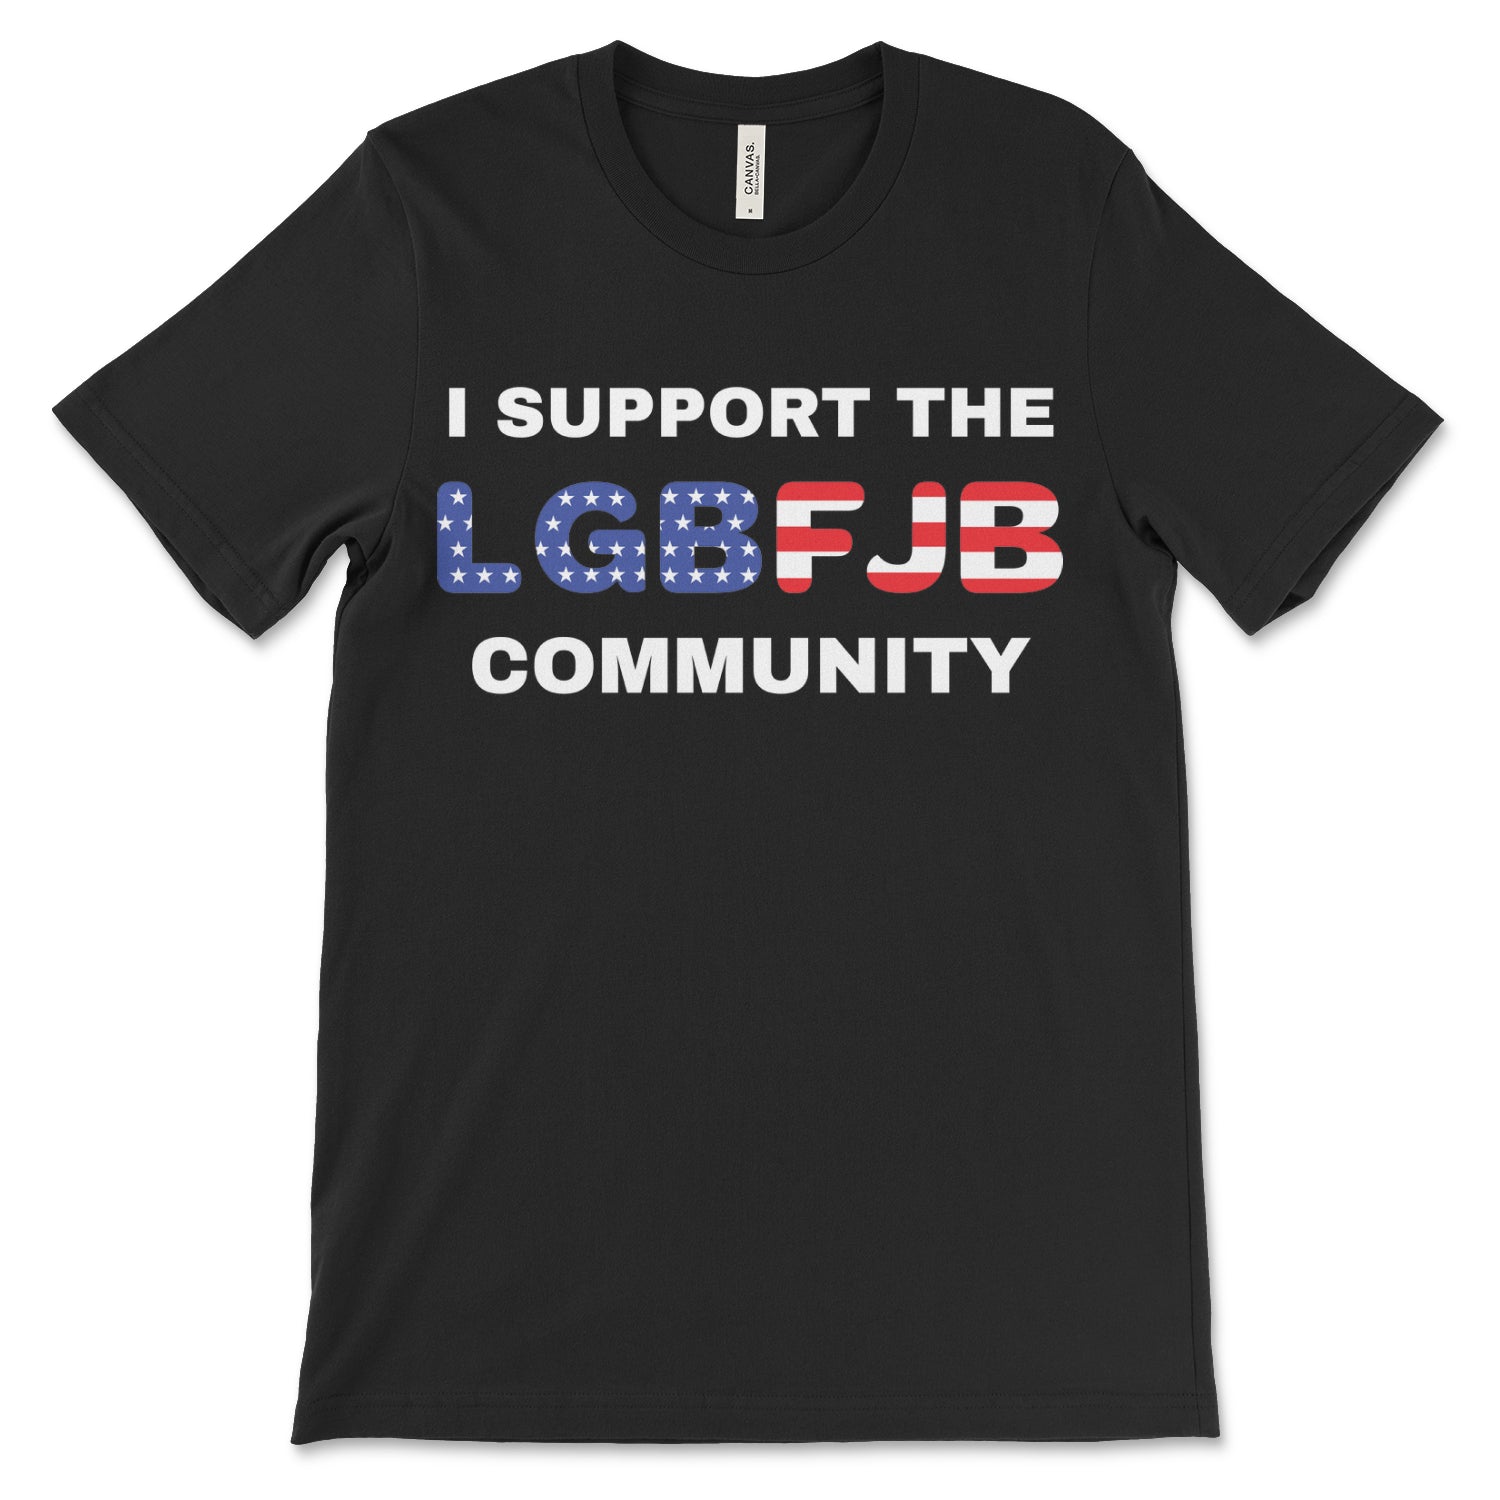 I SUPPORT THE LGBFJB COMMUNITY SHORT SLEEVE T-SHIRT